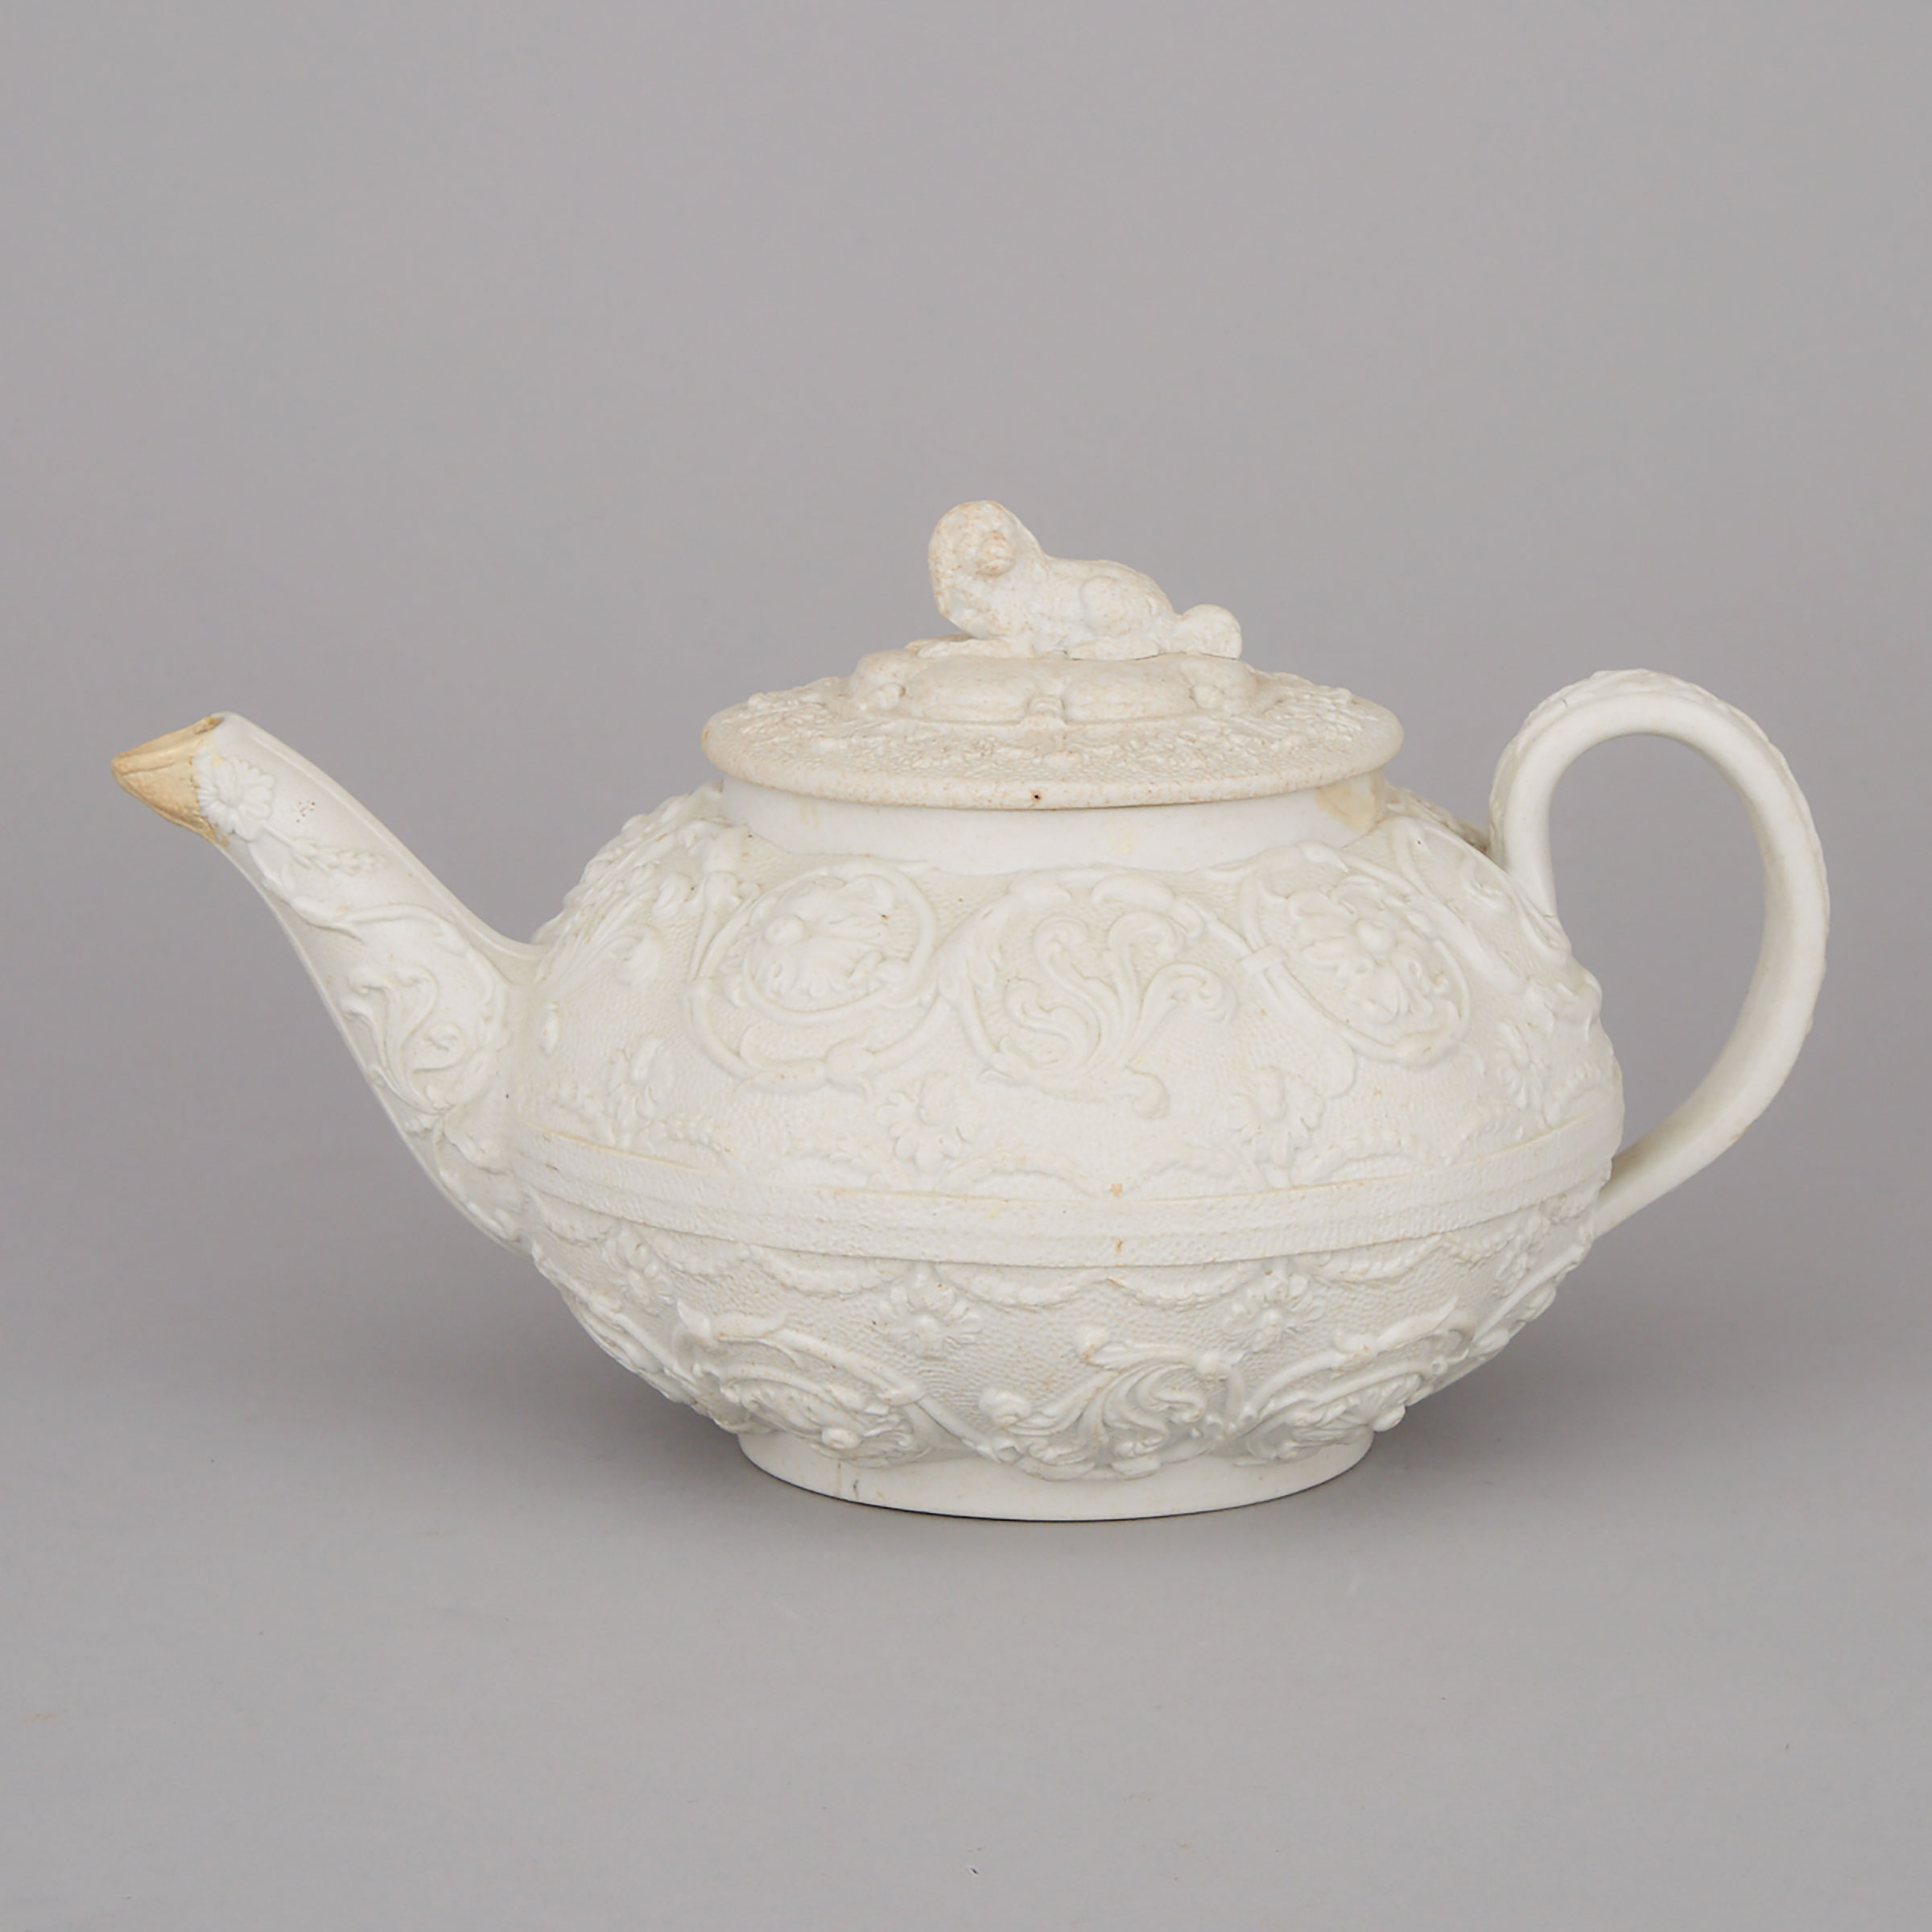 Wedgwood Smear Glazed Teapot, early 19th century